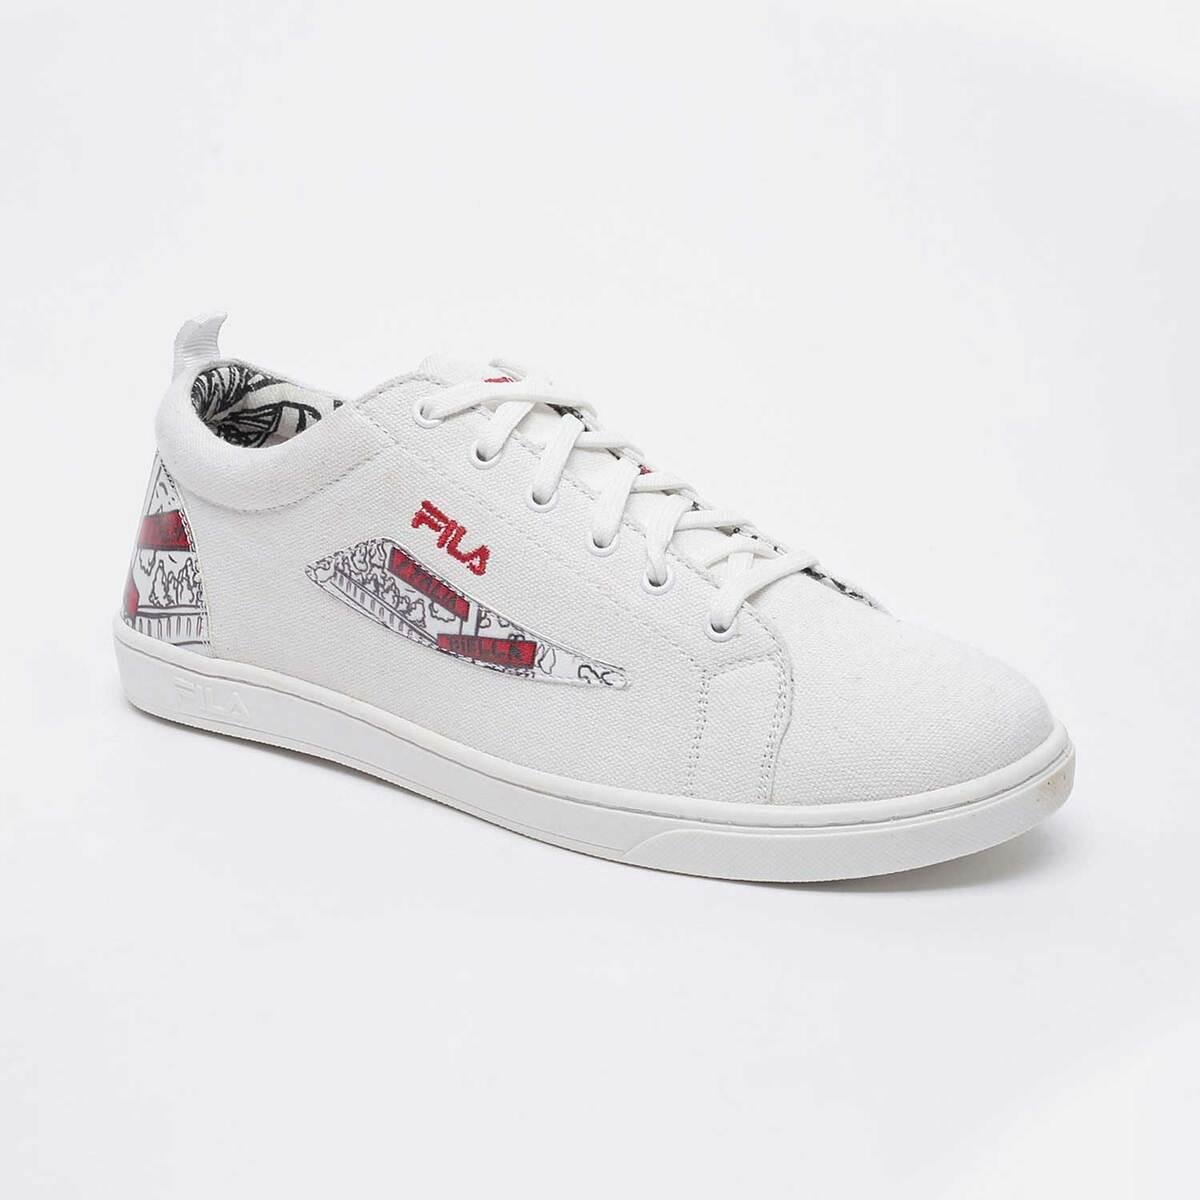 Buy Fila Men's Apex Red Sneakers From Fancode Shop.